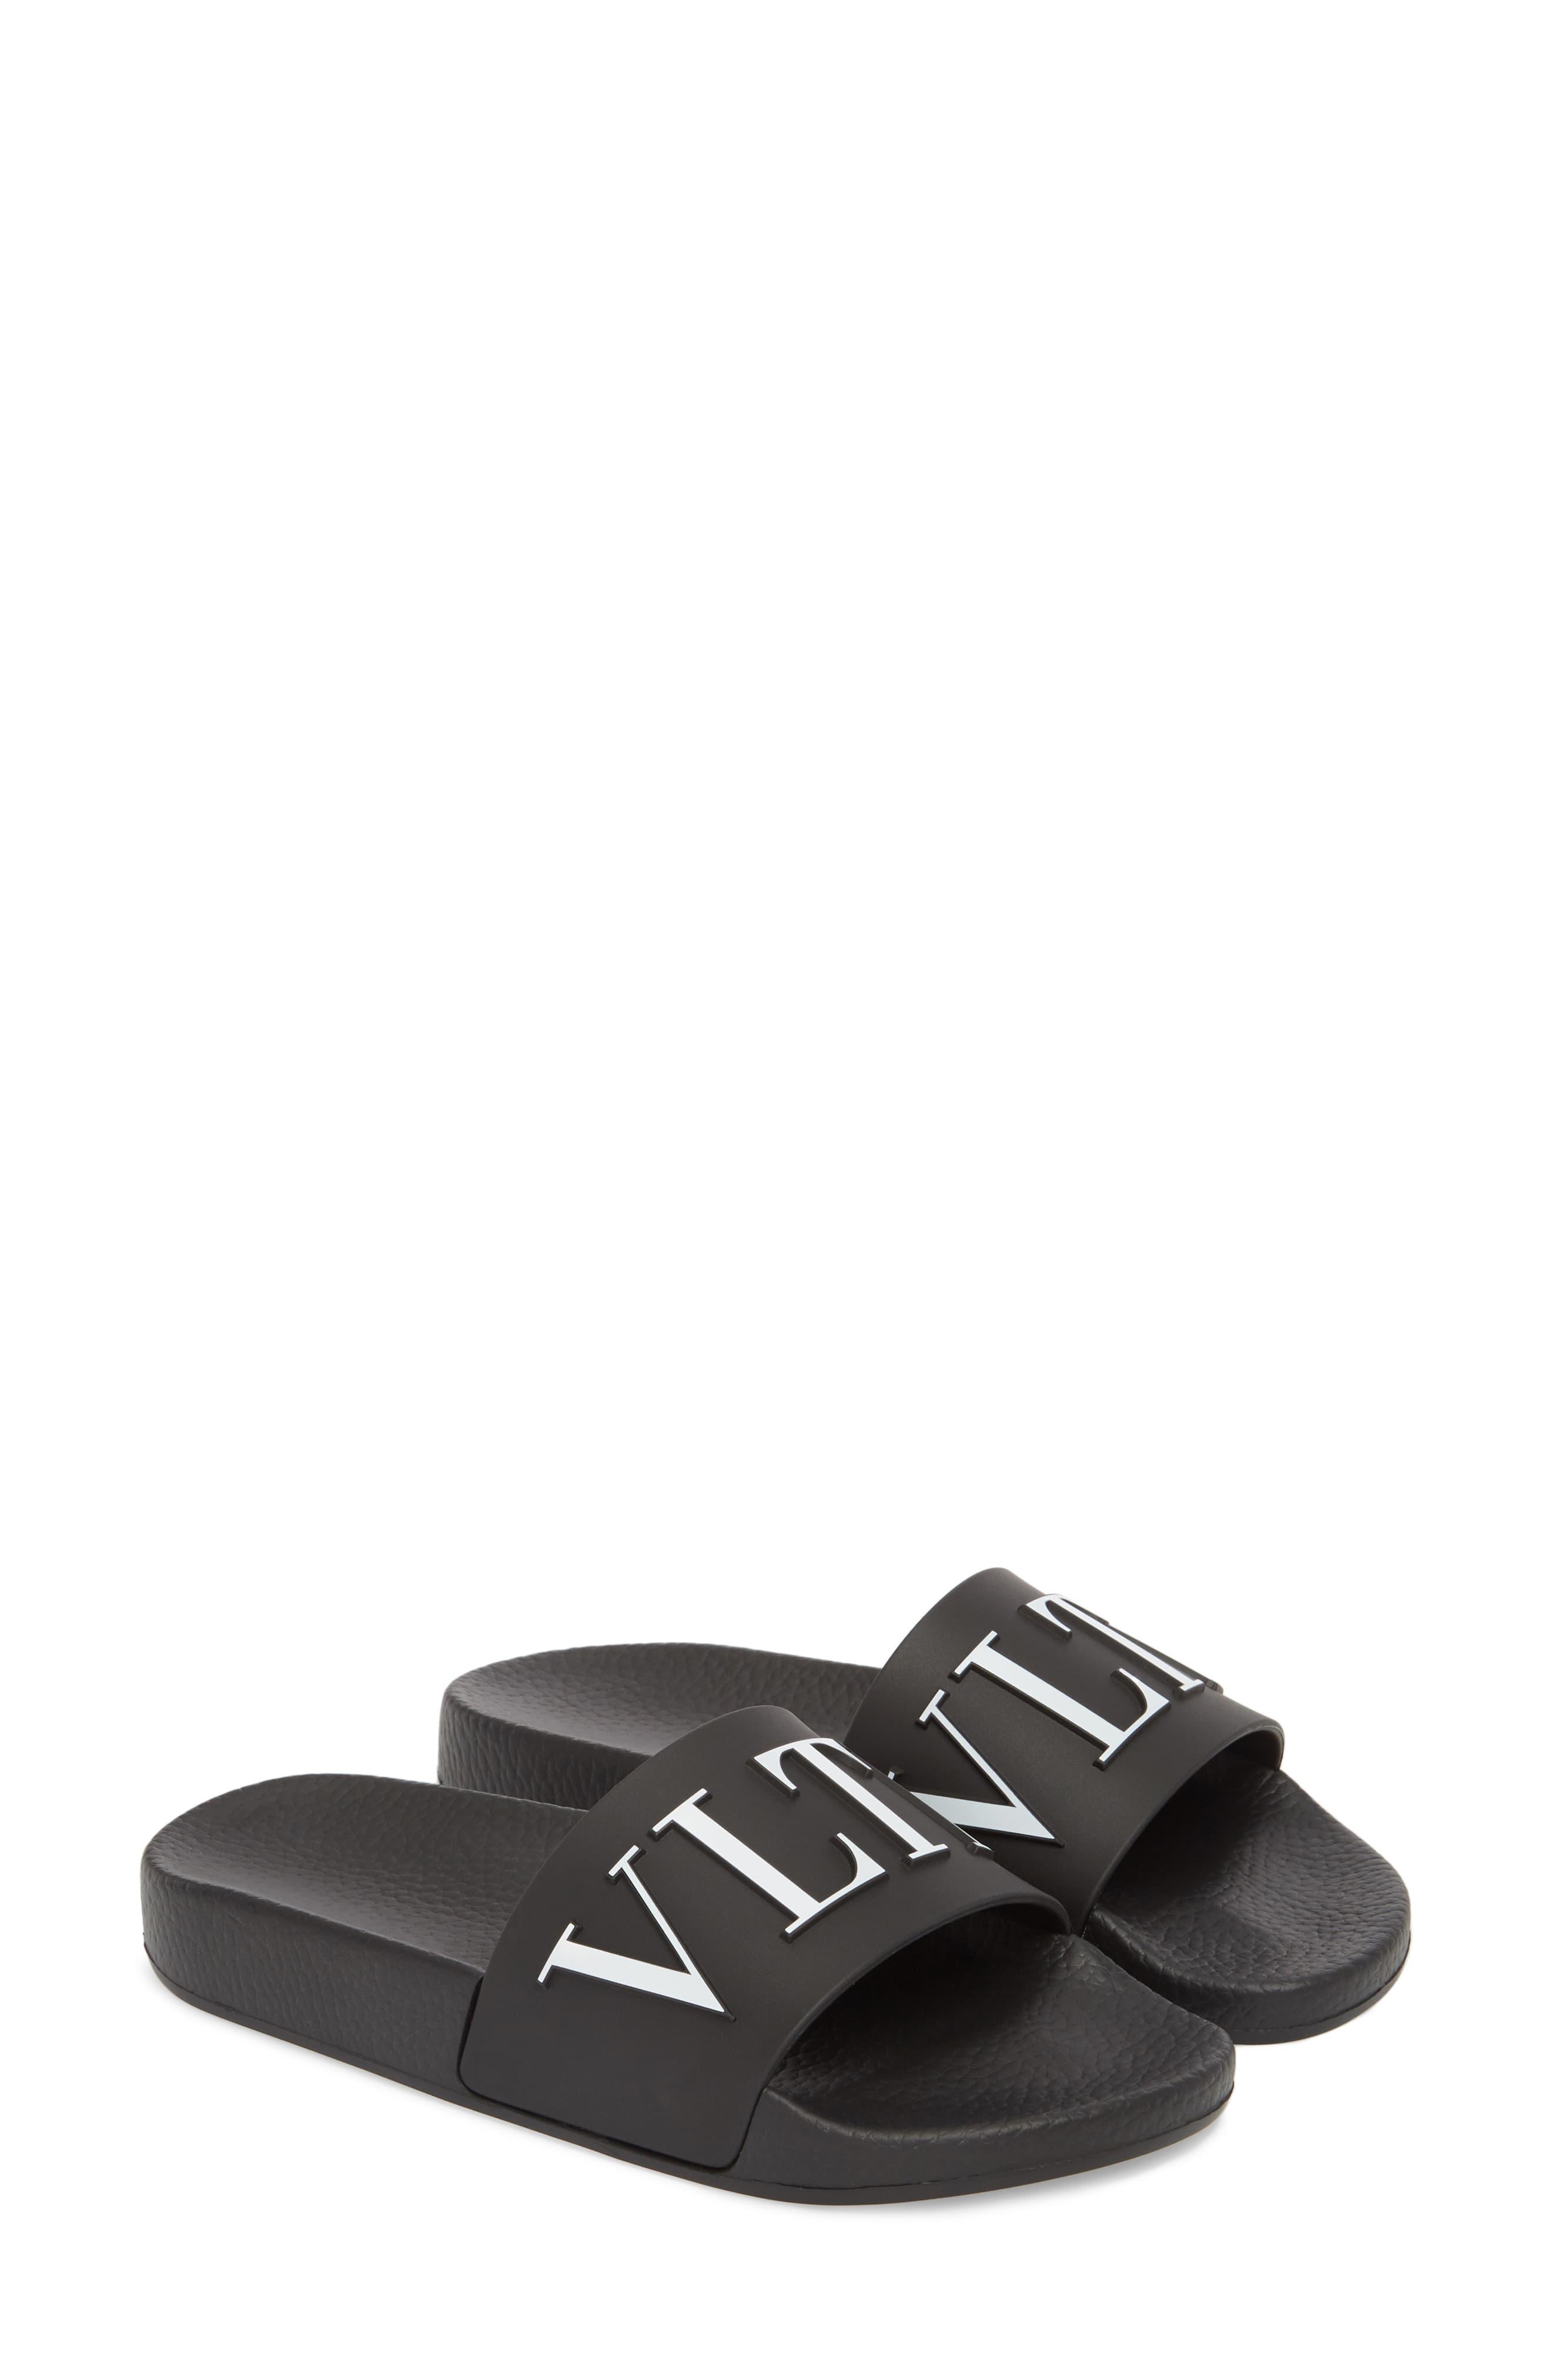 Valentino Vltn Pool Slide Sandal in Black - Save 42% - Lyst